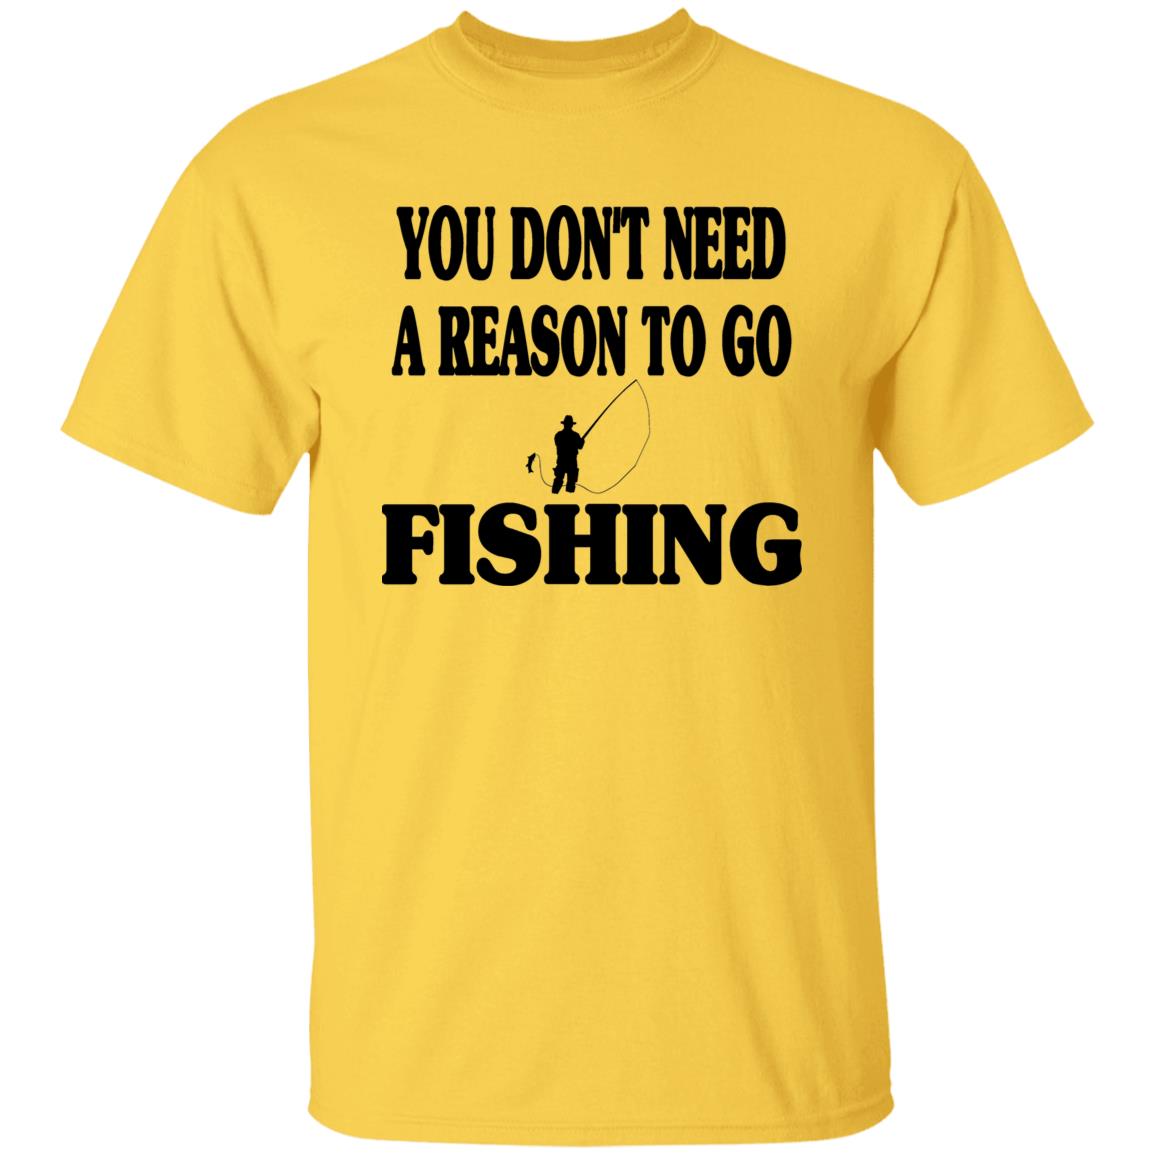 You don't need a reason to go fishing b t-shirt daisy